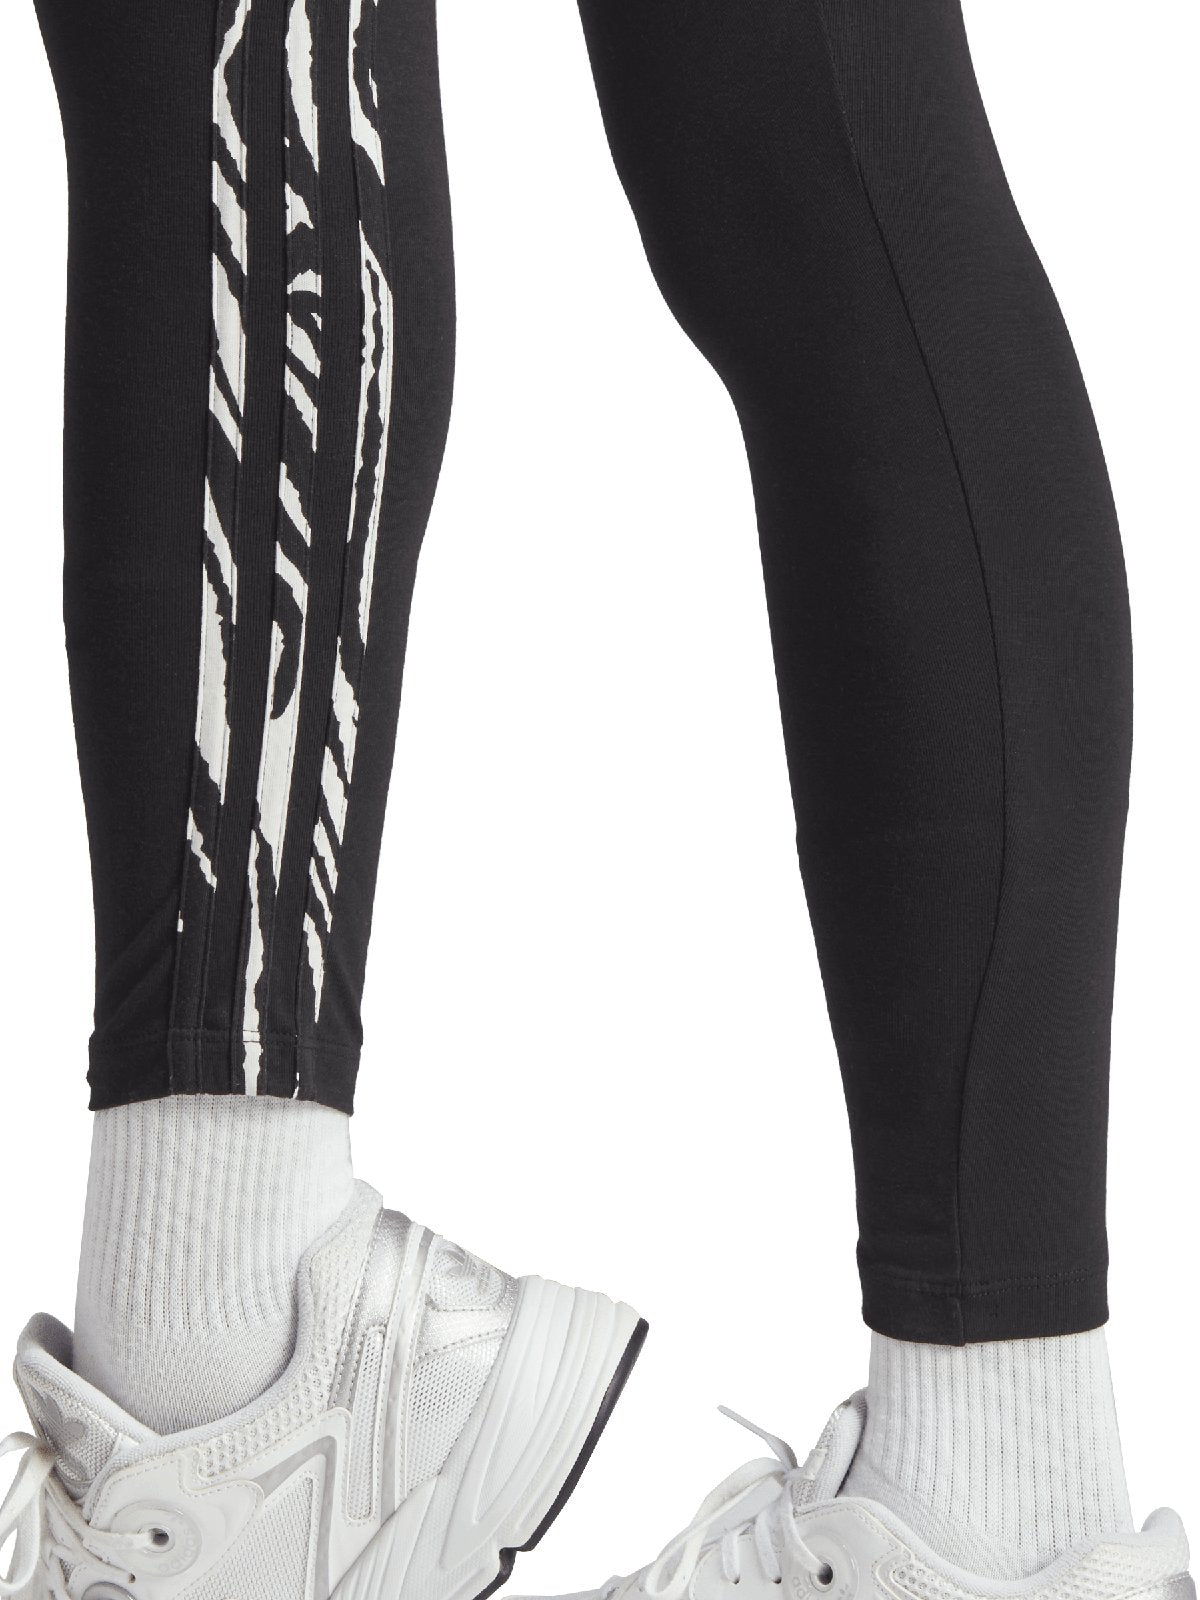 Leggings Donna Adidas - 3-Stripes Zebra Animal Infill Tights - Nero